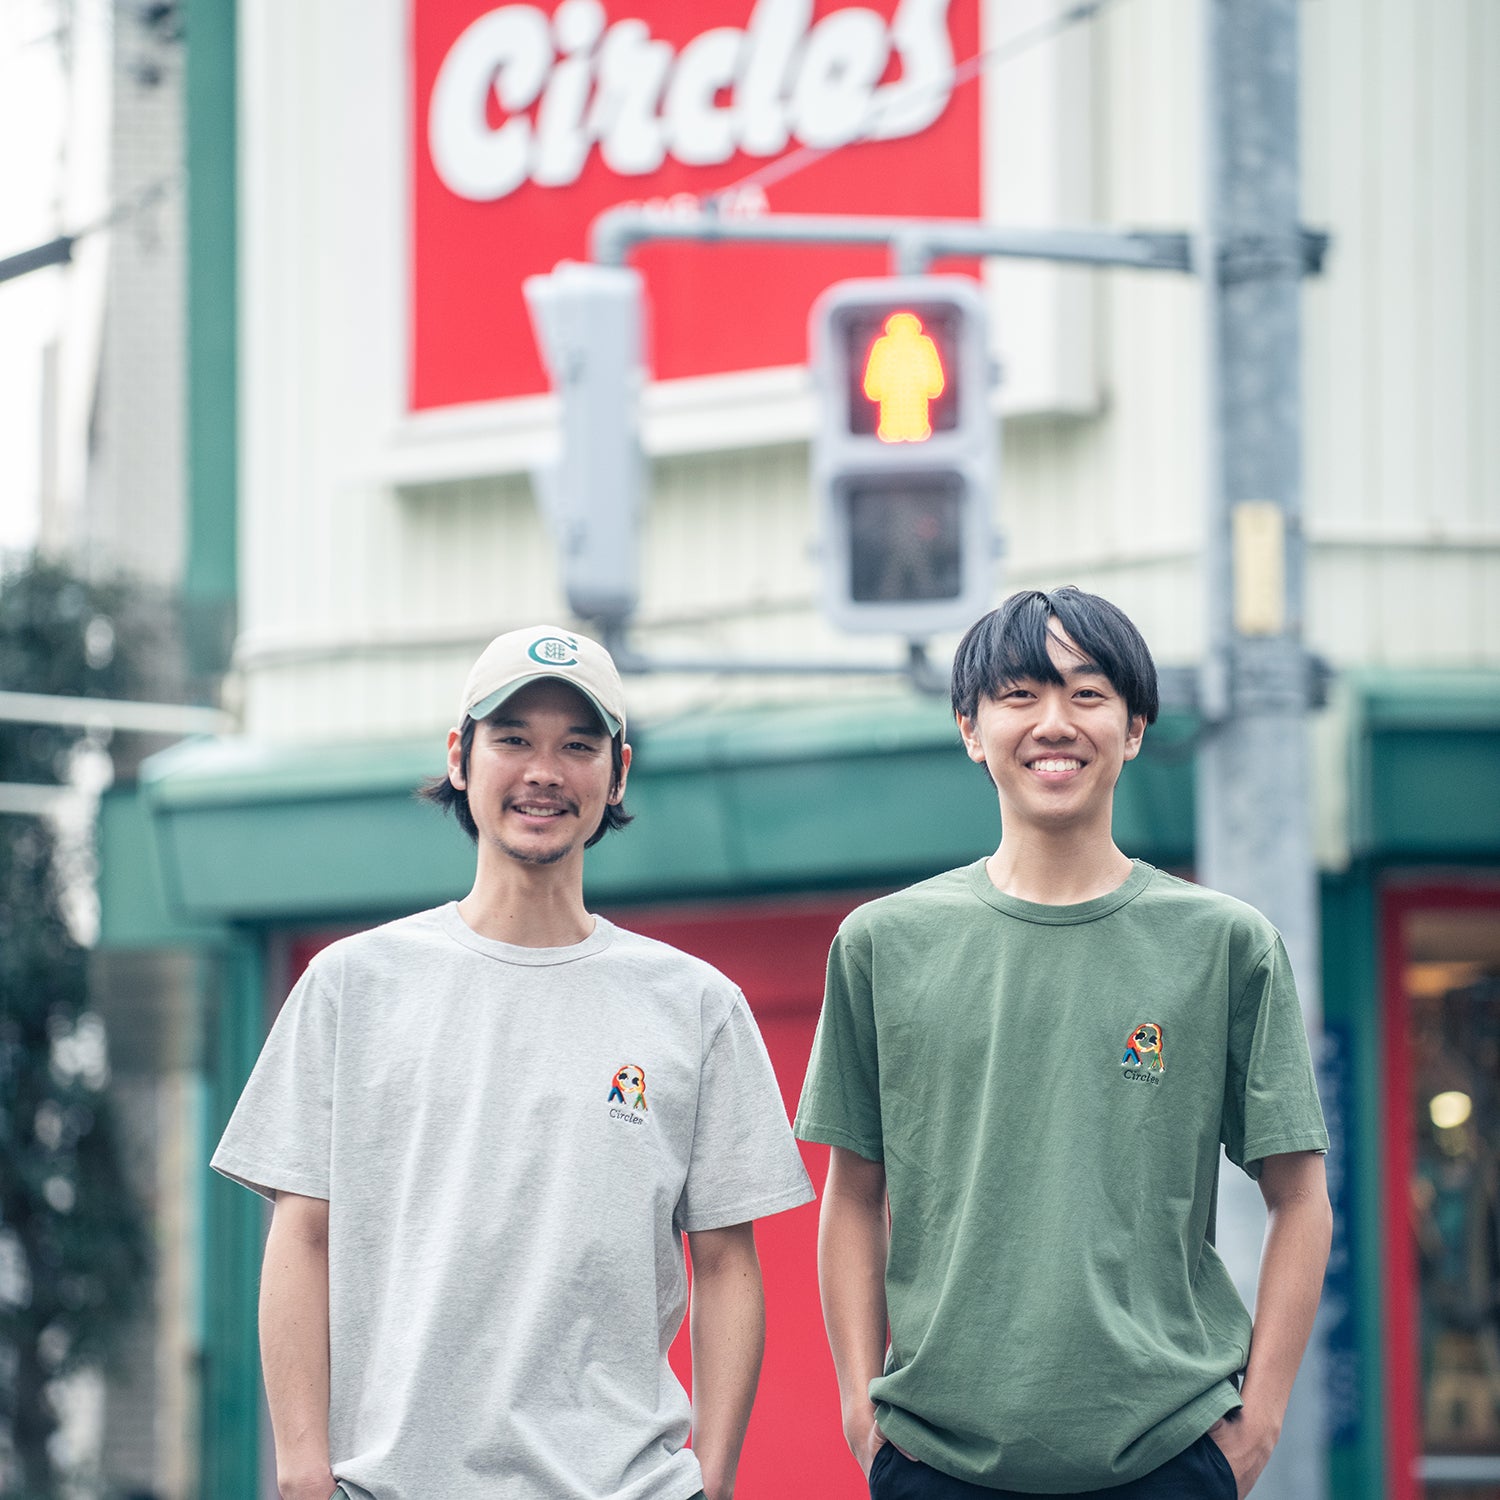 CIRCLES ORIGINAL TACOMA FUJI RECORDS meets Circles T-Shirt